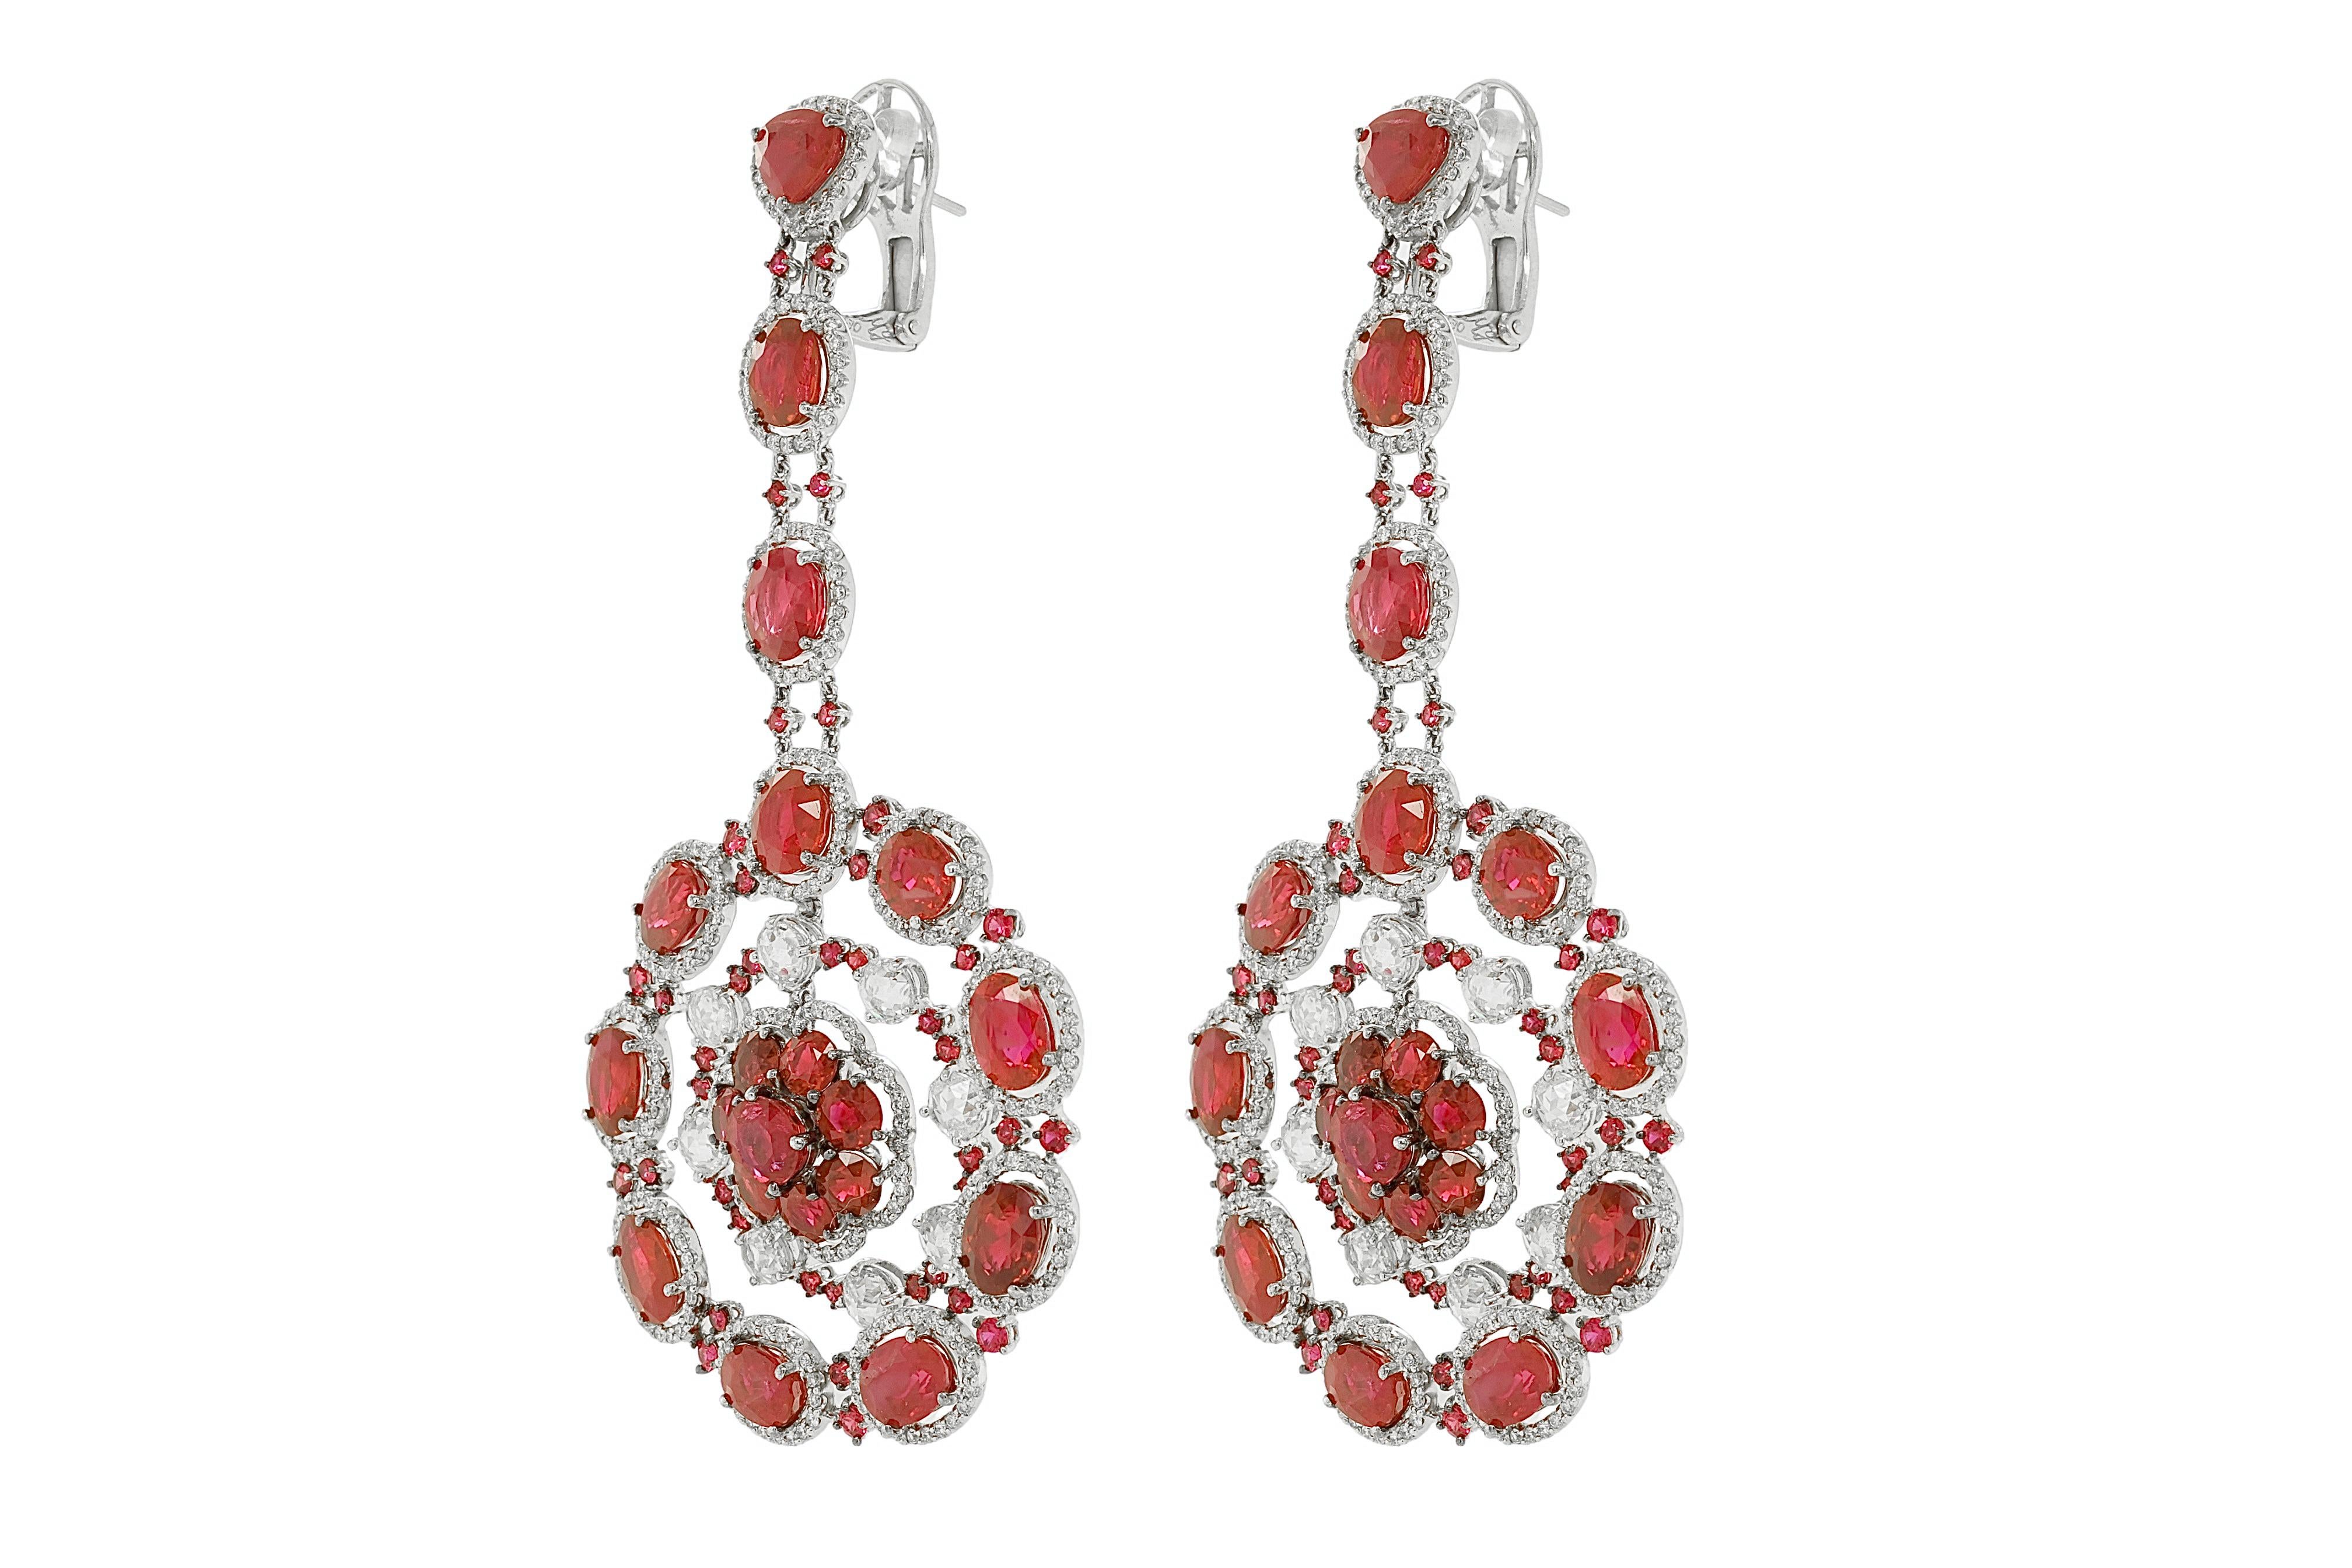 lalitha jewellery earrings models